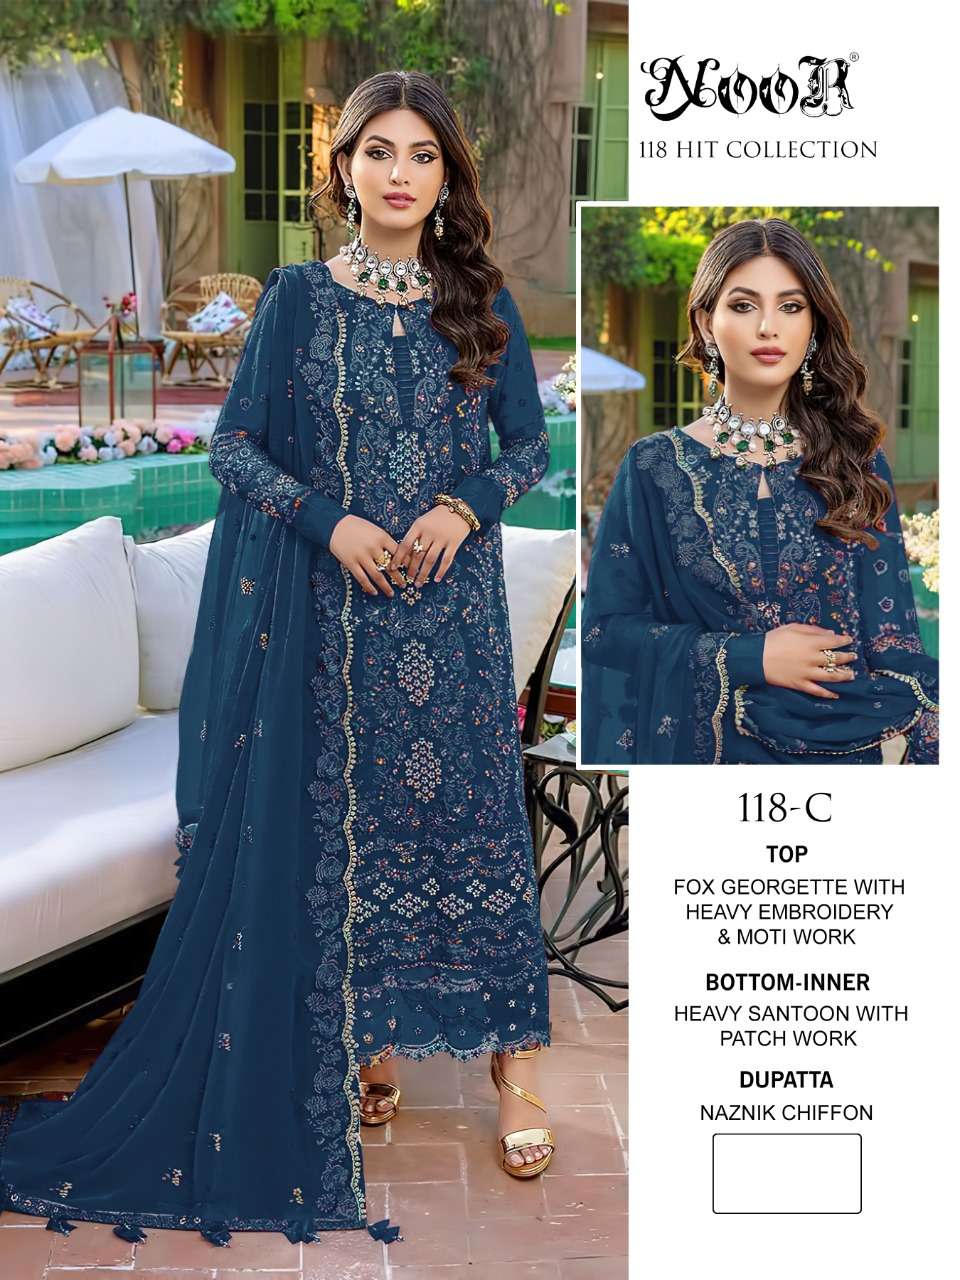 Noor 118 Hit Collection Exclusive Designer Pakistani Suit Wholesale Dealer